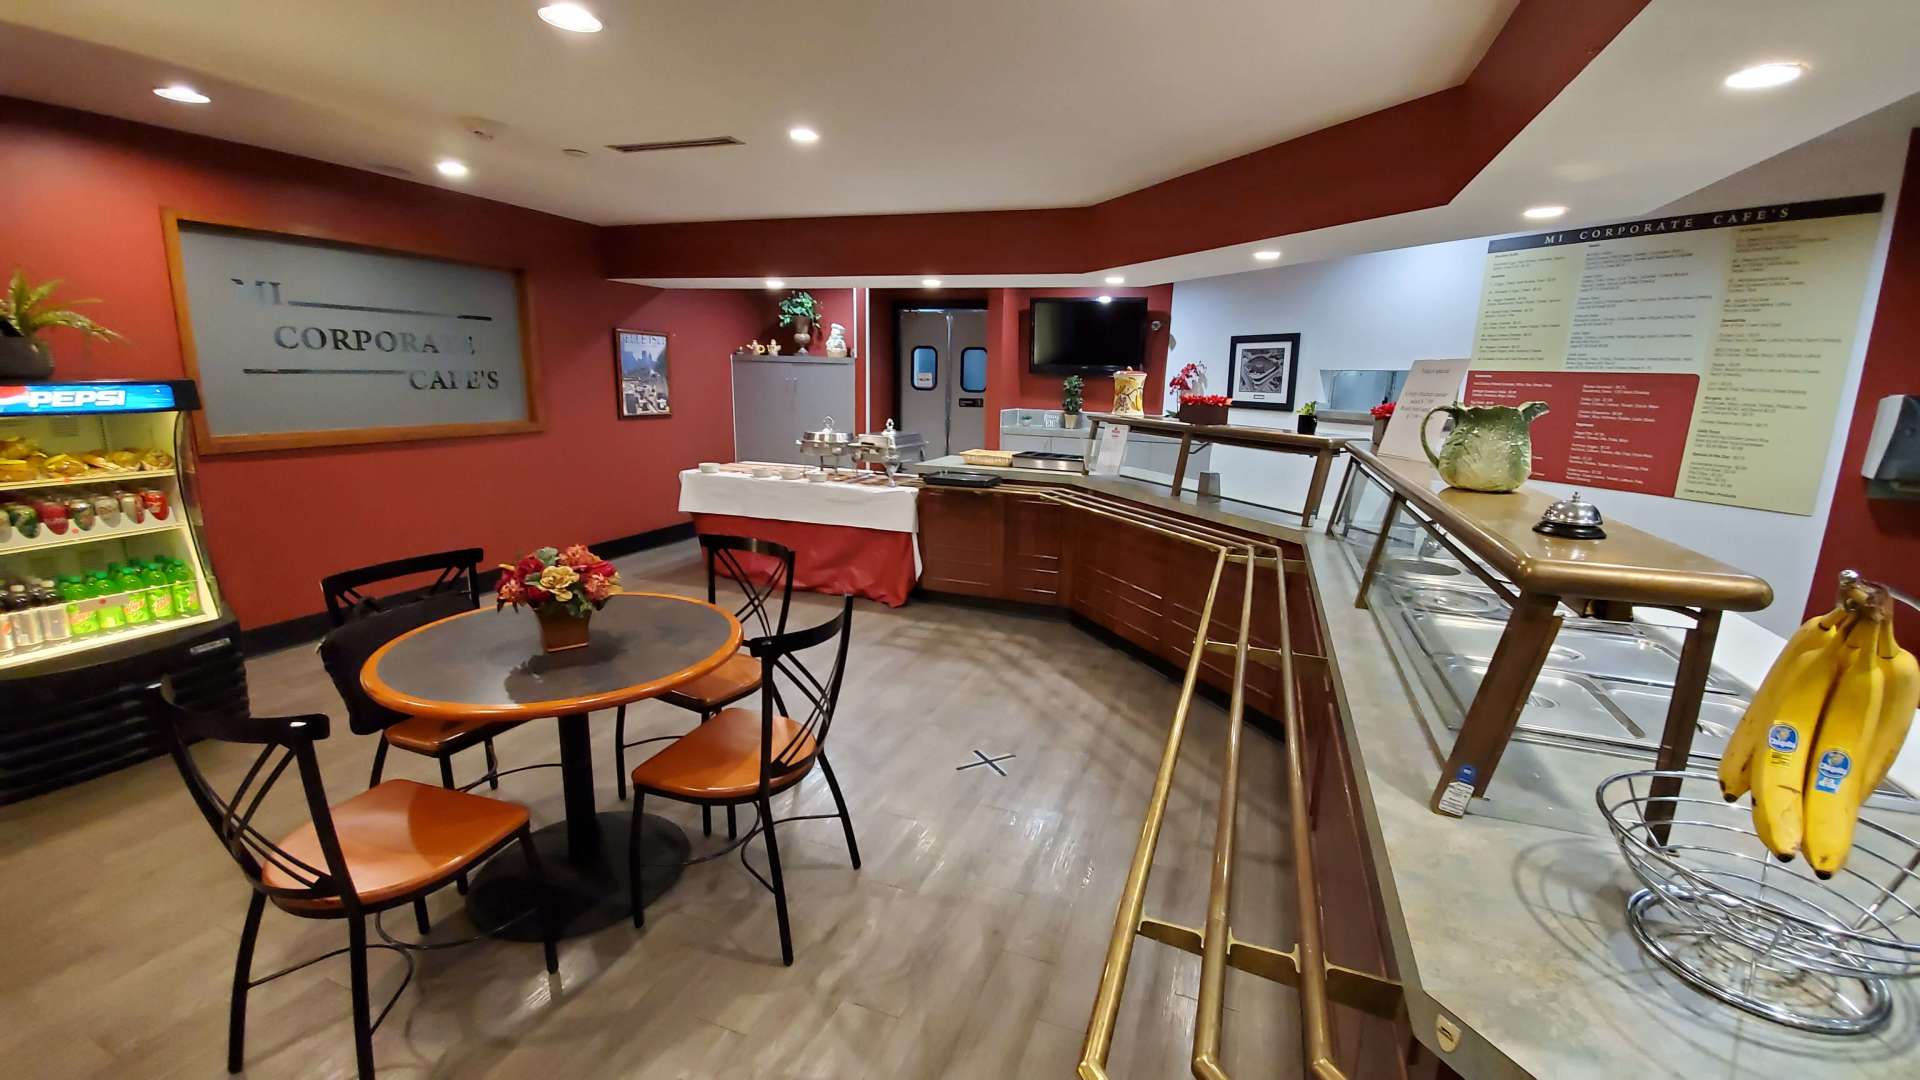 MI Corporate Cafes in Bloomfield Hills, MI